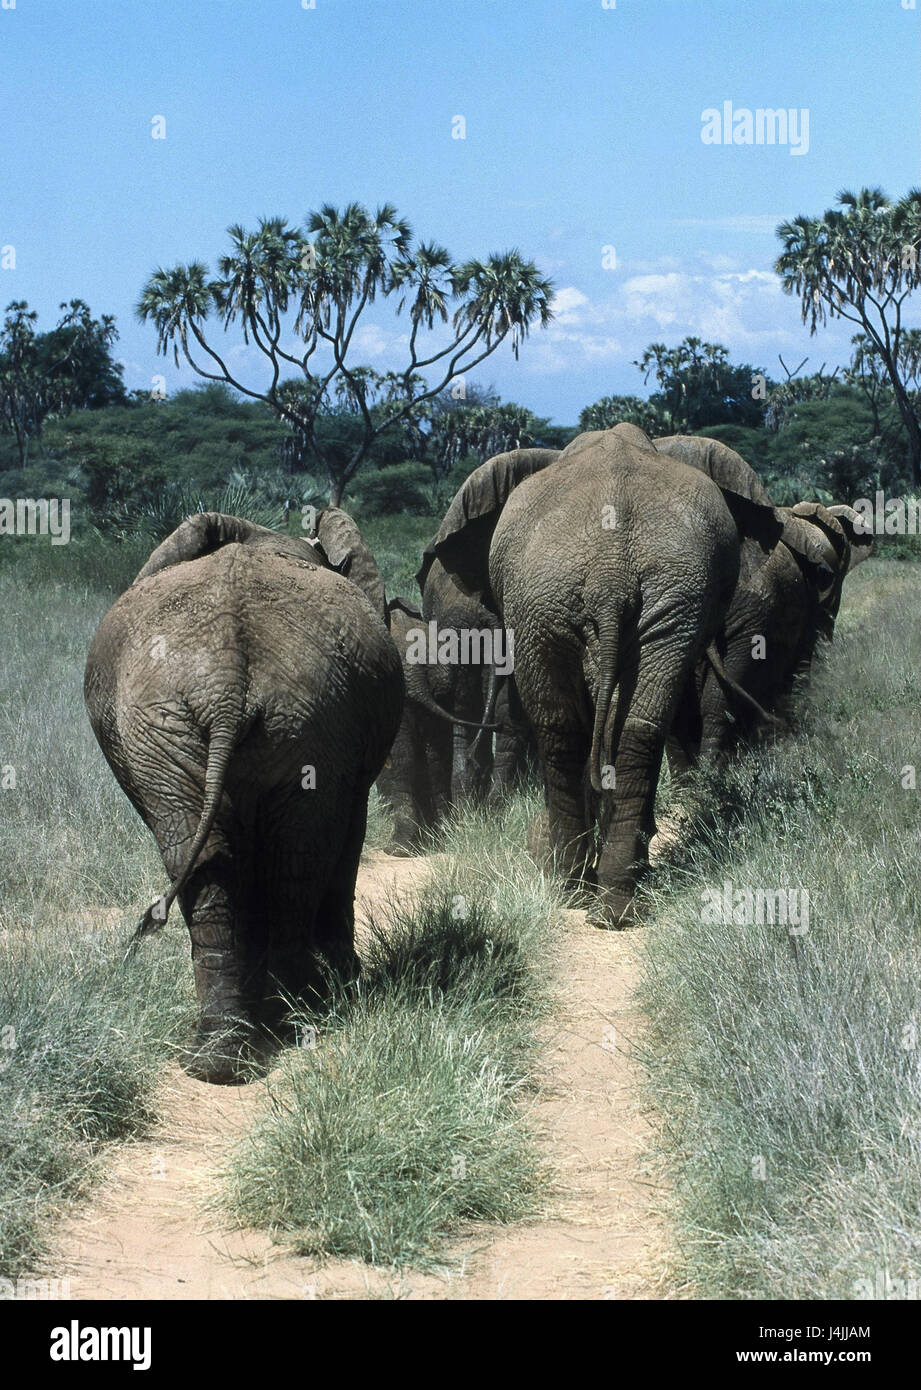 Meadow, African elephants, Loxodonta africana, focuses, back view animals, wild animals, mammals, elephants, trunk animals, pachyderms, land mammals, Wildlife, animal lives Stock Photo